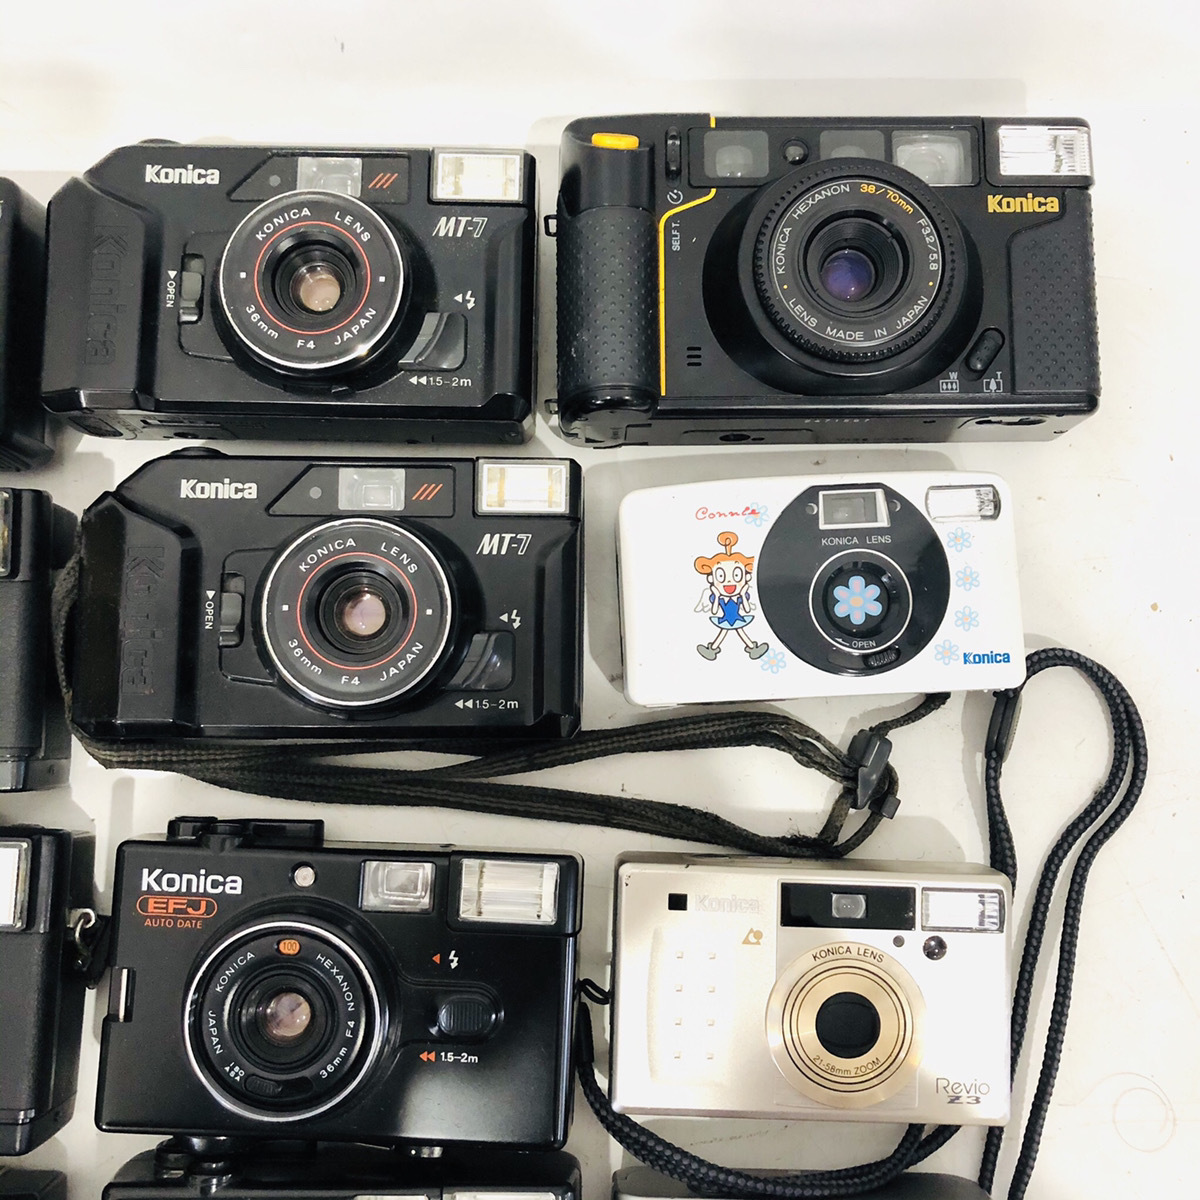 【R1245】KONICA コニカ フィルムカメラ コンパクトカメラ 大量 まとめ売り C35 EFD C35AF AF2 MT-7 EFJ MR.70 Revio_画像6